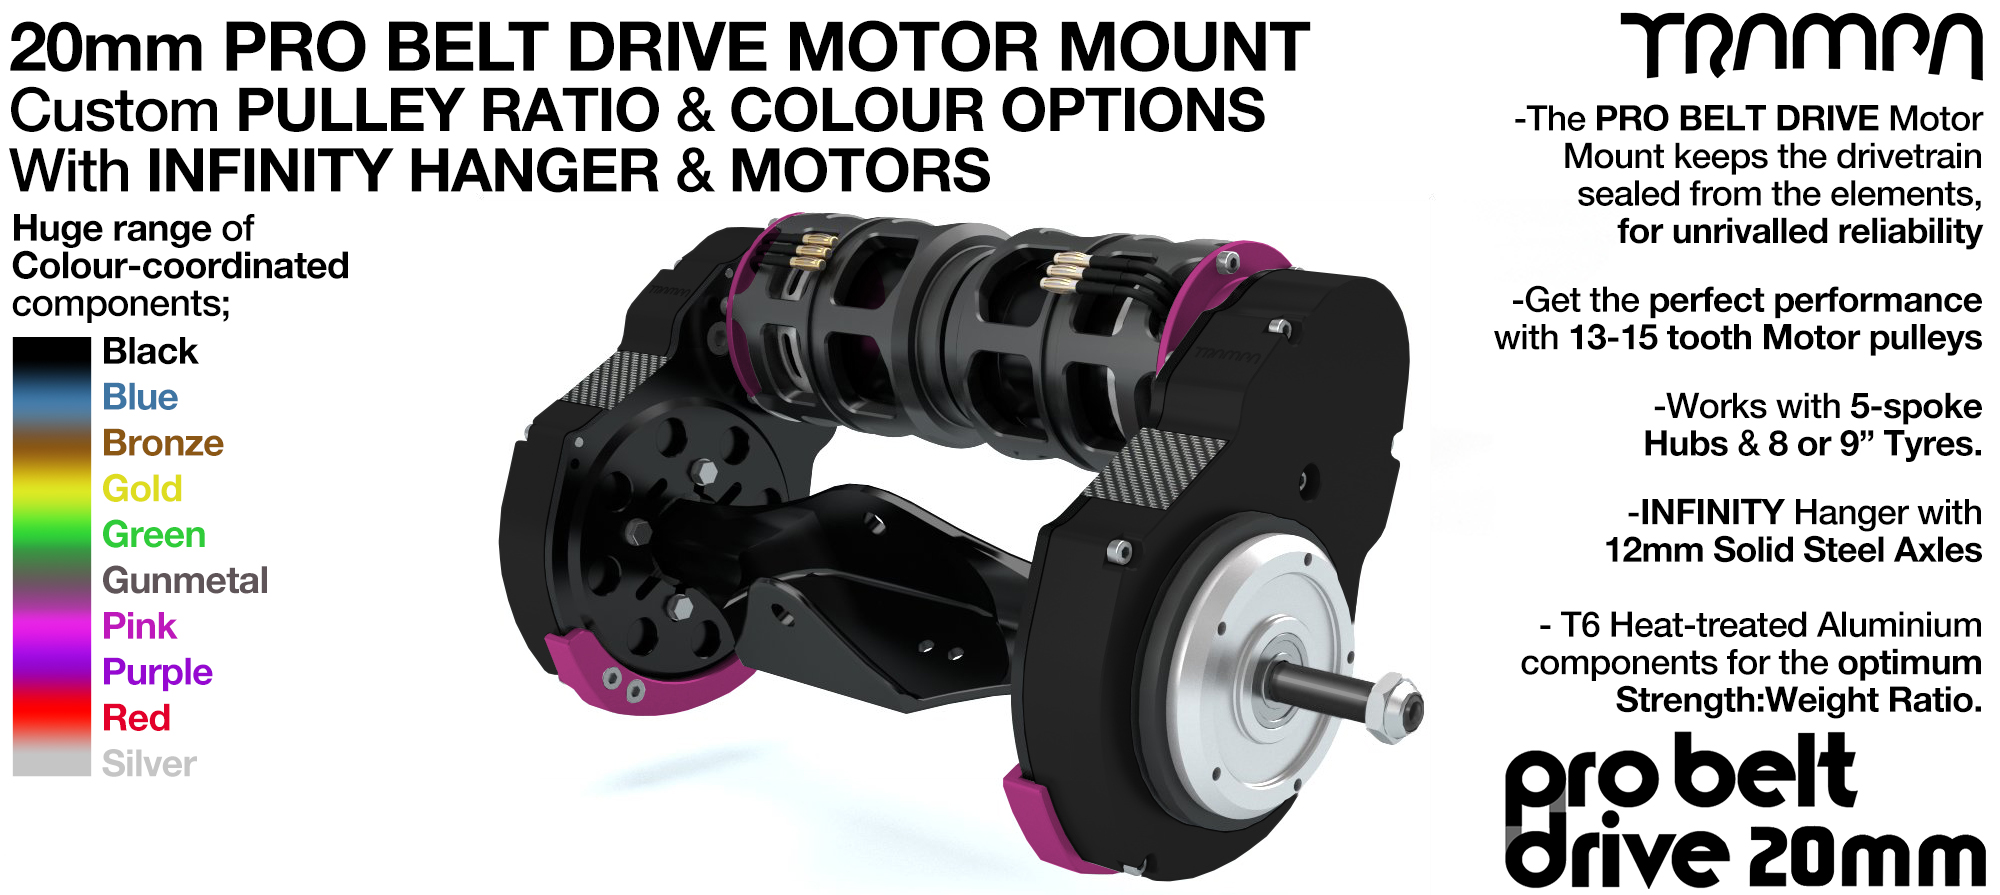 20mm PRO BELT DRIVE Motor Mounts MOTORS, PULLEYS & Motor PROTECTION FILTERS mounted on a CNC Hanger